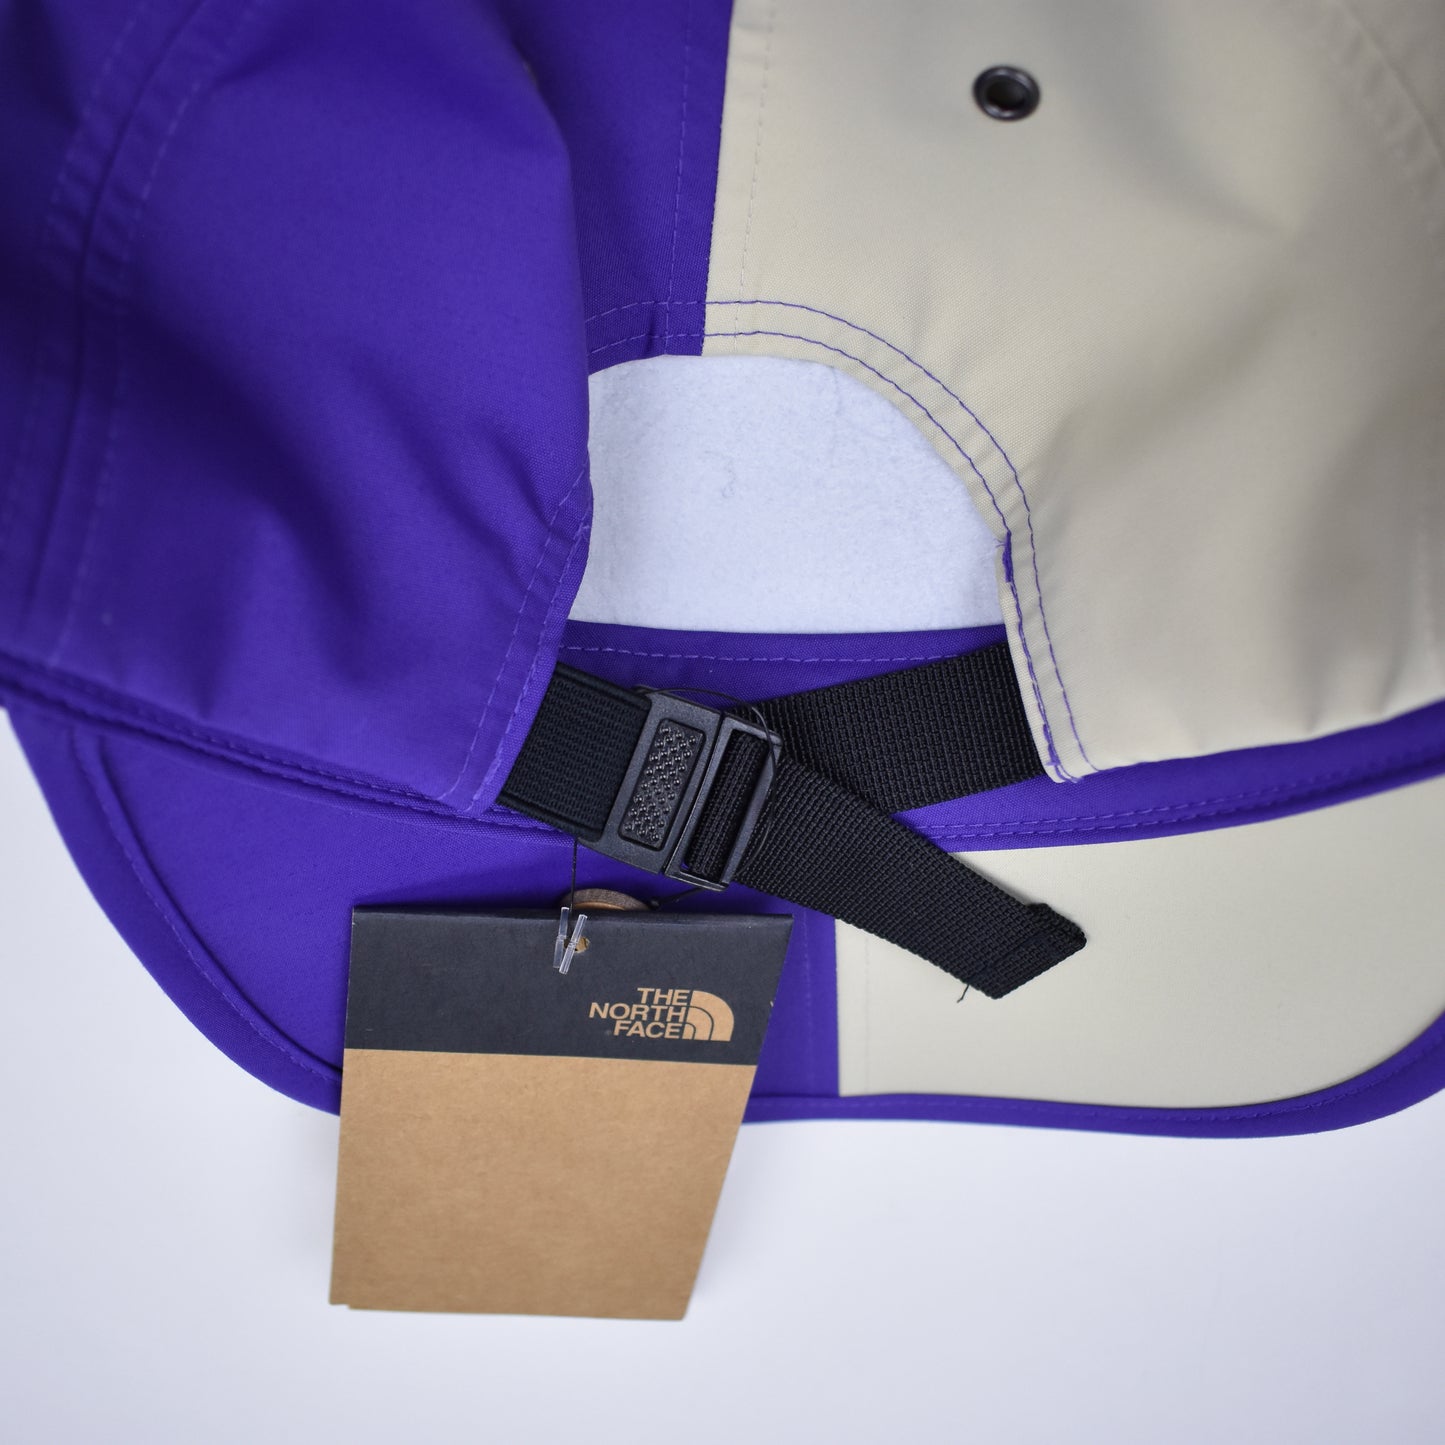 Supreme x The North Face - Split Logo Hat (Beige/Purple)